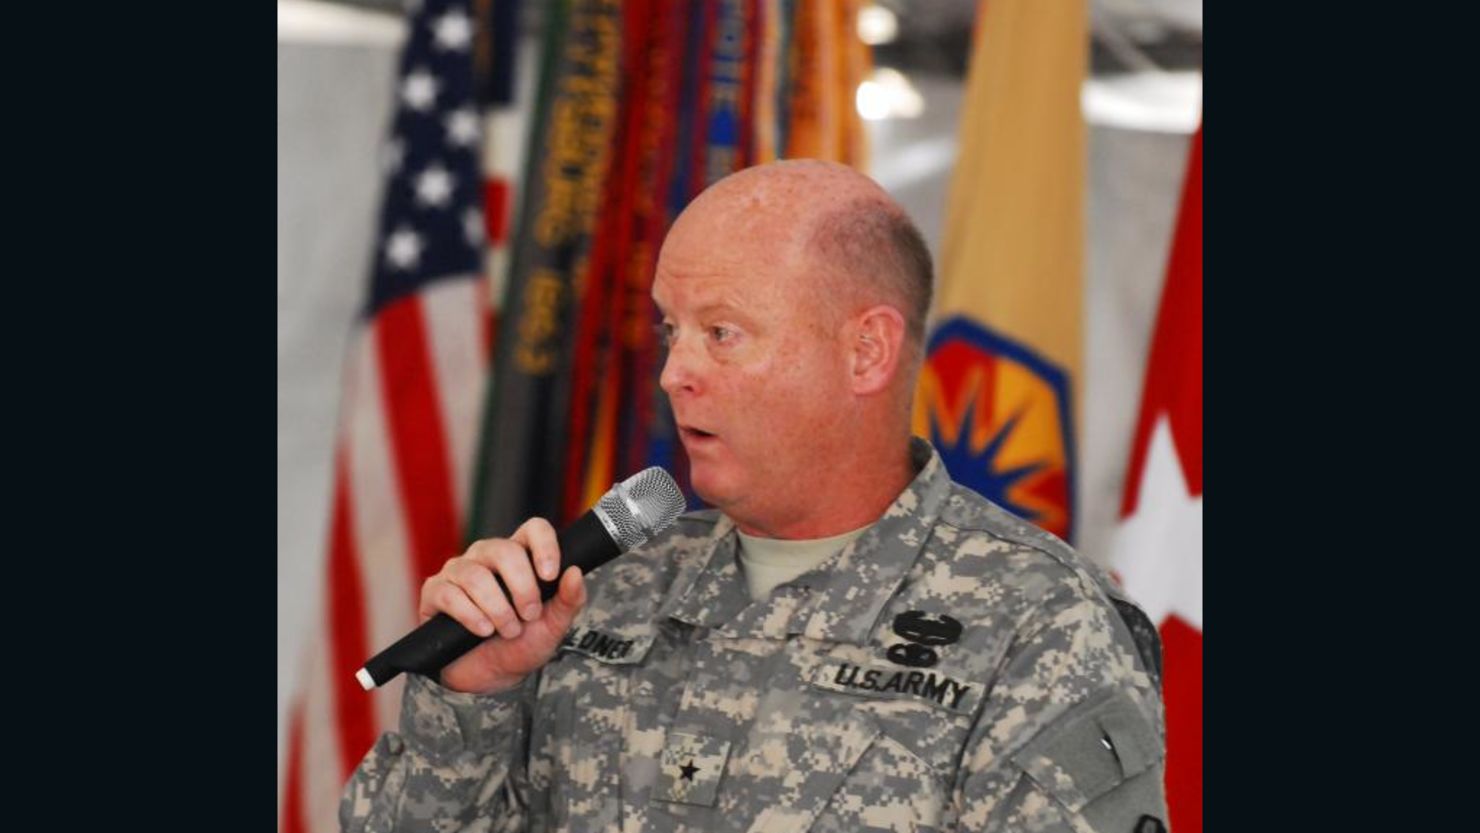 U.S. Brig. Gen. Terence Hildner speaks at an event in Fort Hood, Texas in April.